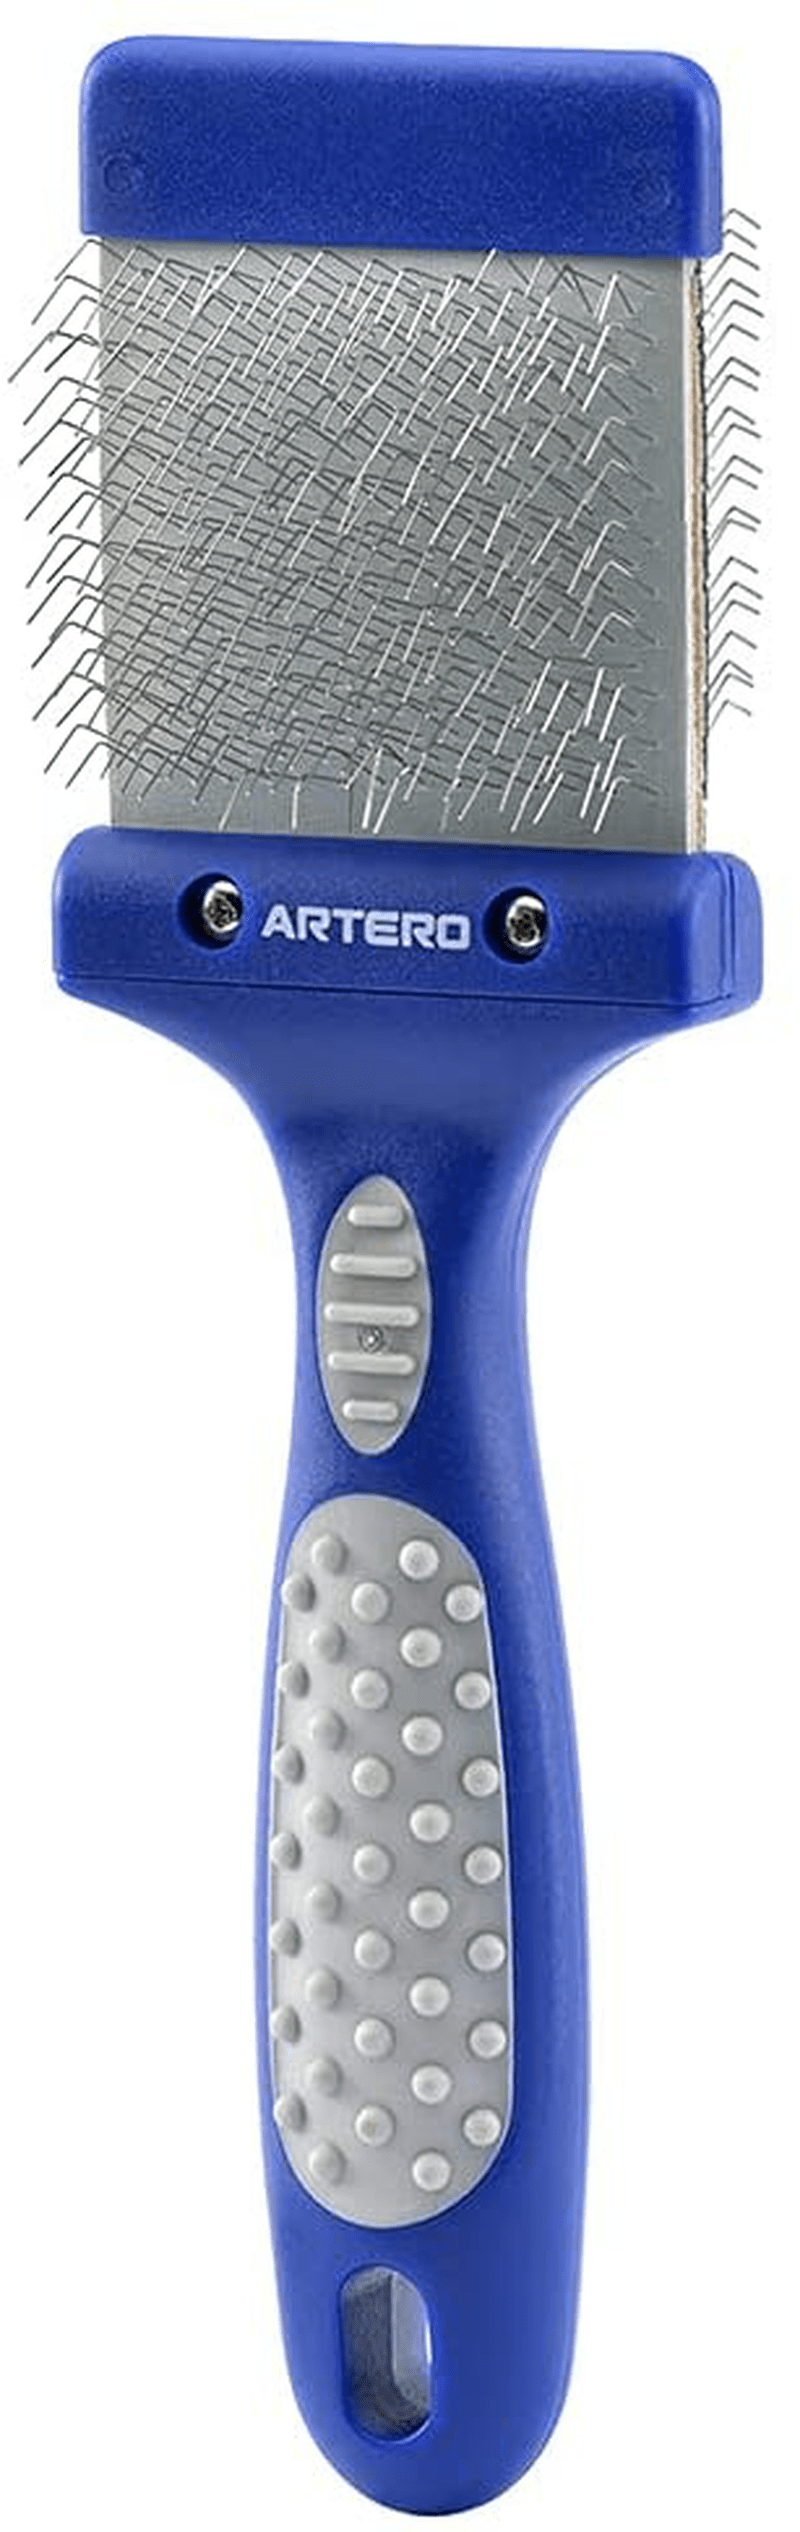 ARTERO Double Flexible Slicker